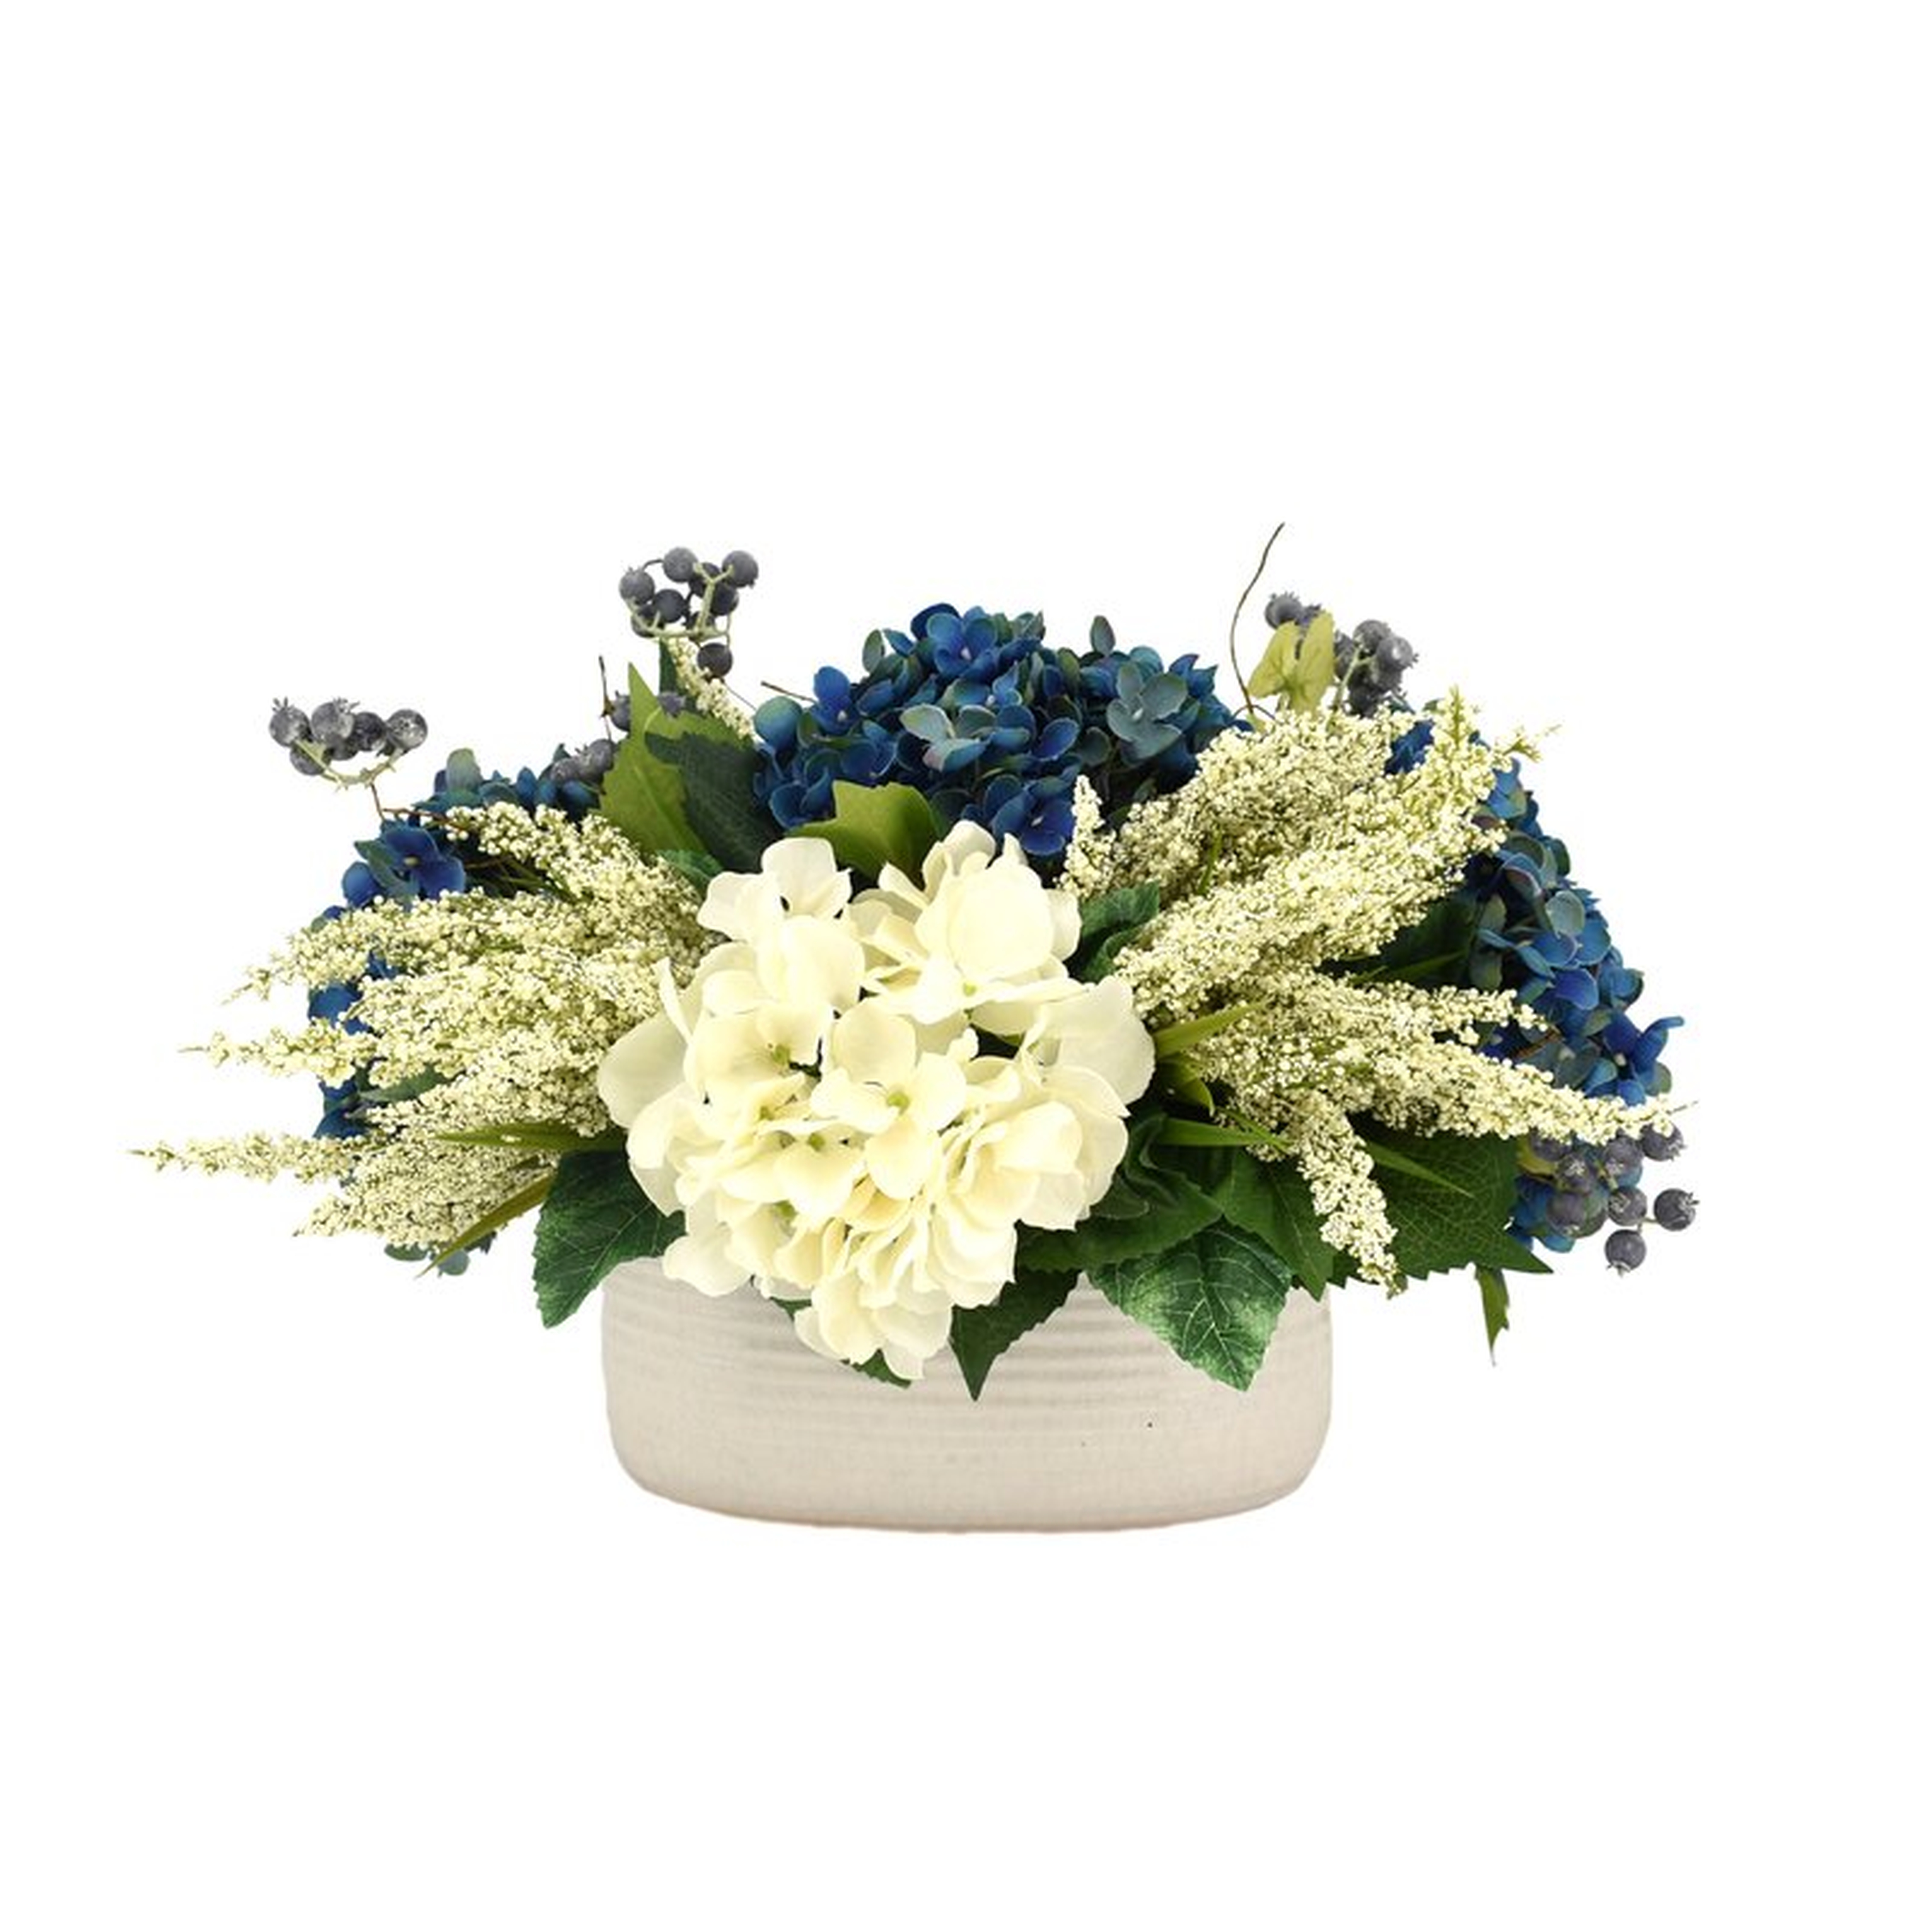 Hydrangeas Floral Arrangements in Pot - Wayfair